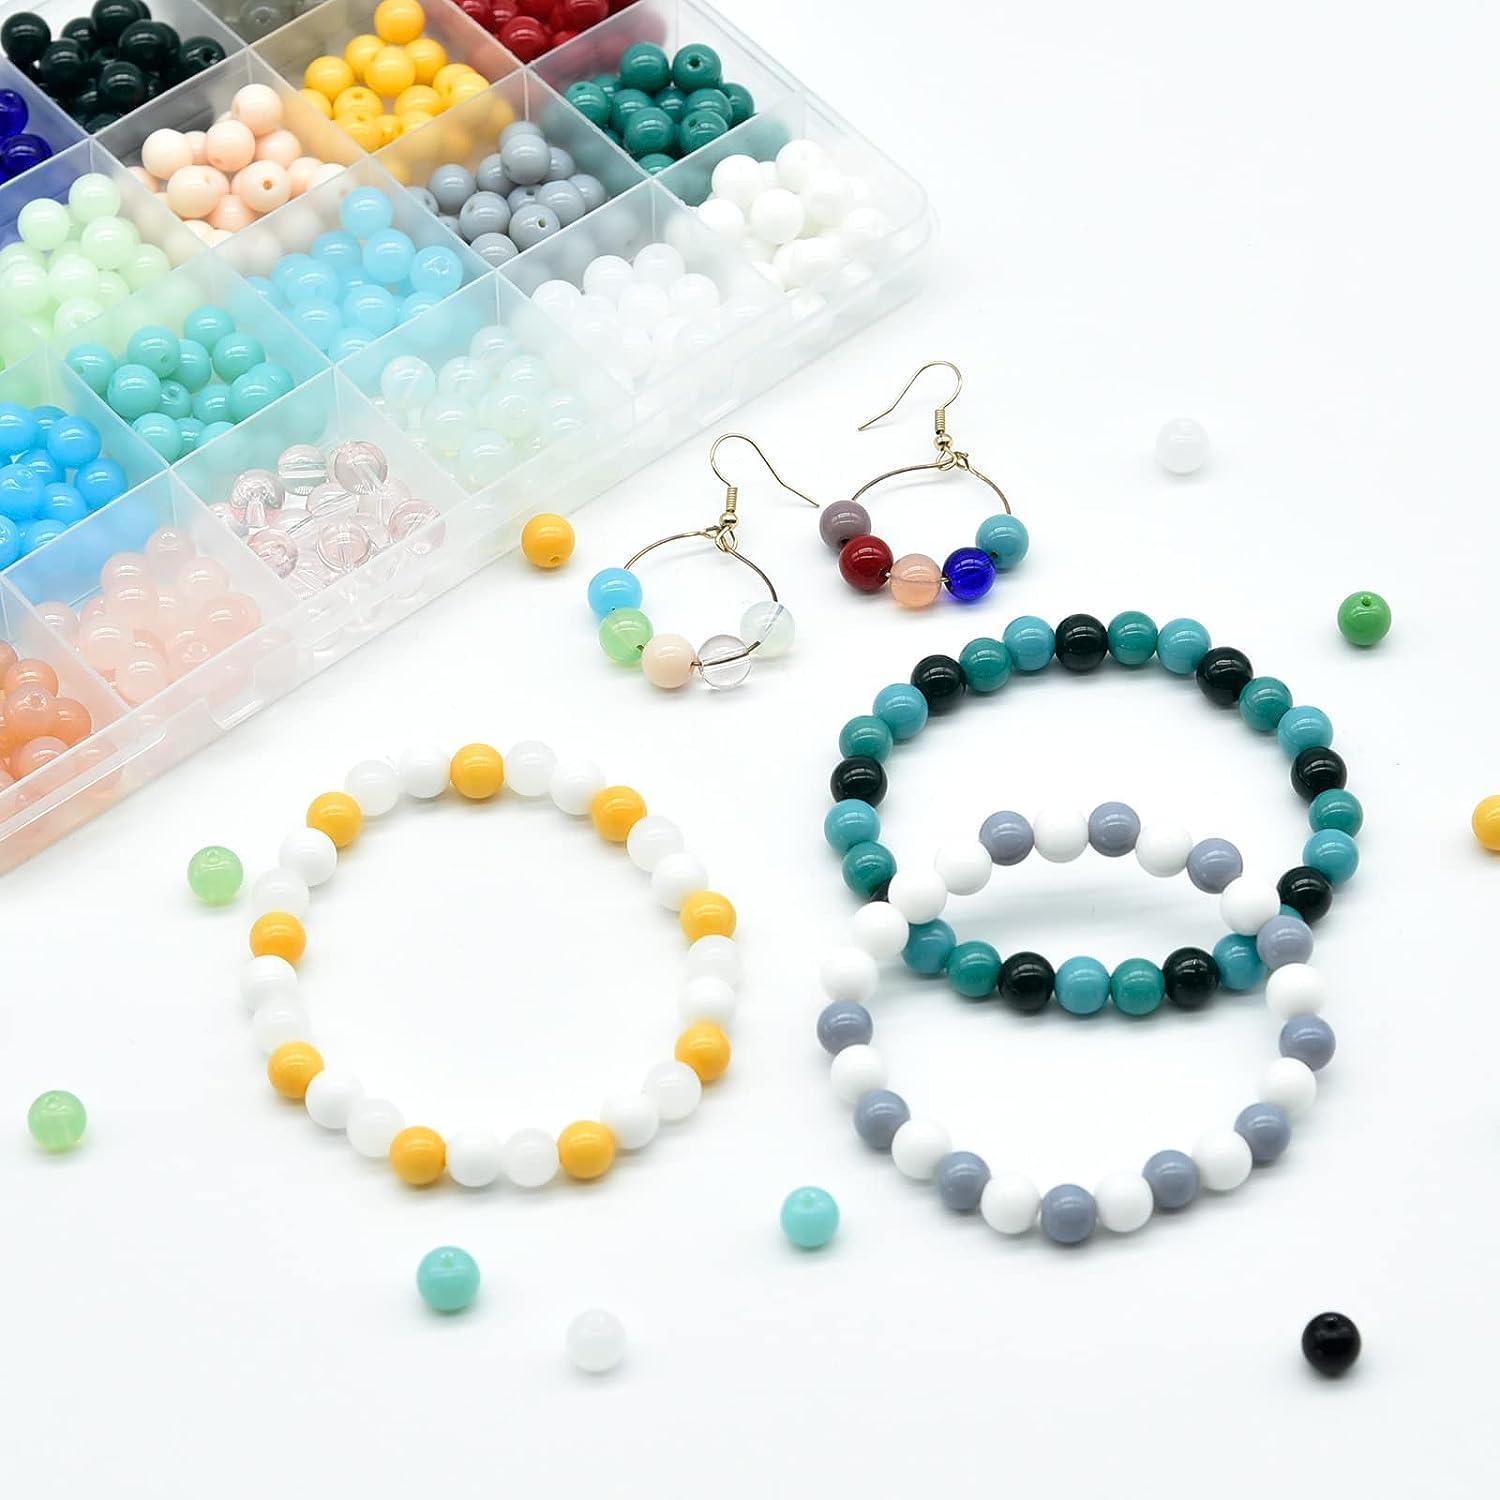 Glass Beads for Jewelry Making, 8mm DIY Crystal Gemstone Beads Bracelet  Making Kit Healing Chakra Beads, 24 Color Round Gemstone Beads Suitable for